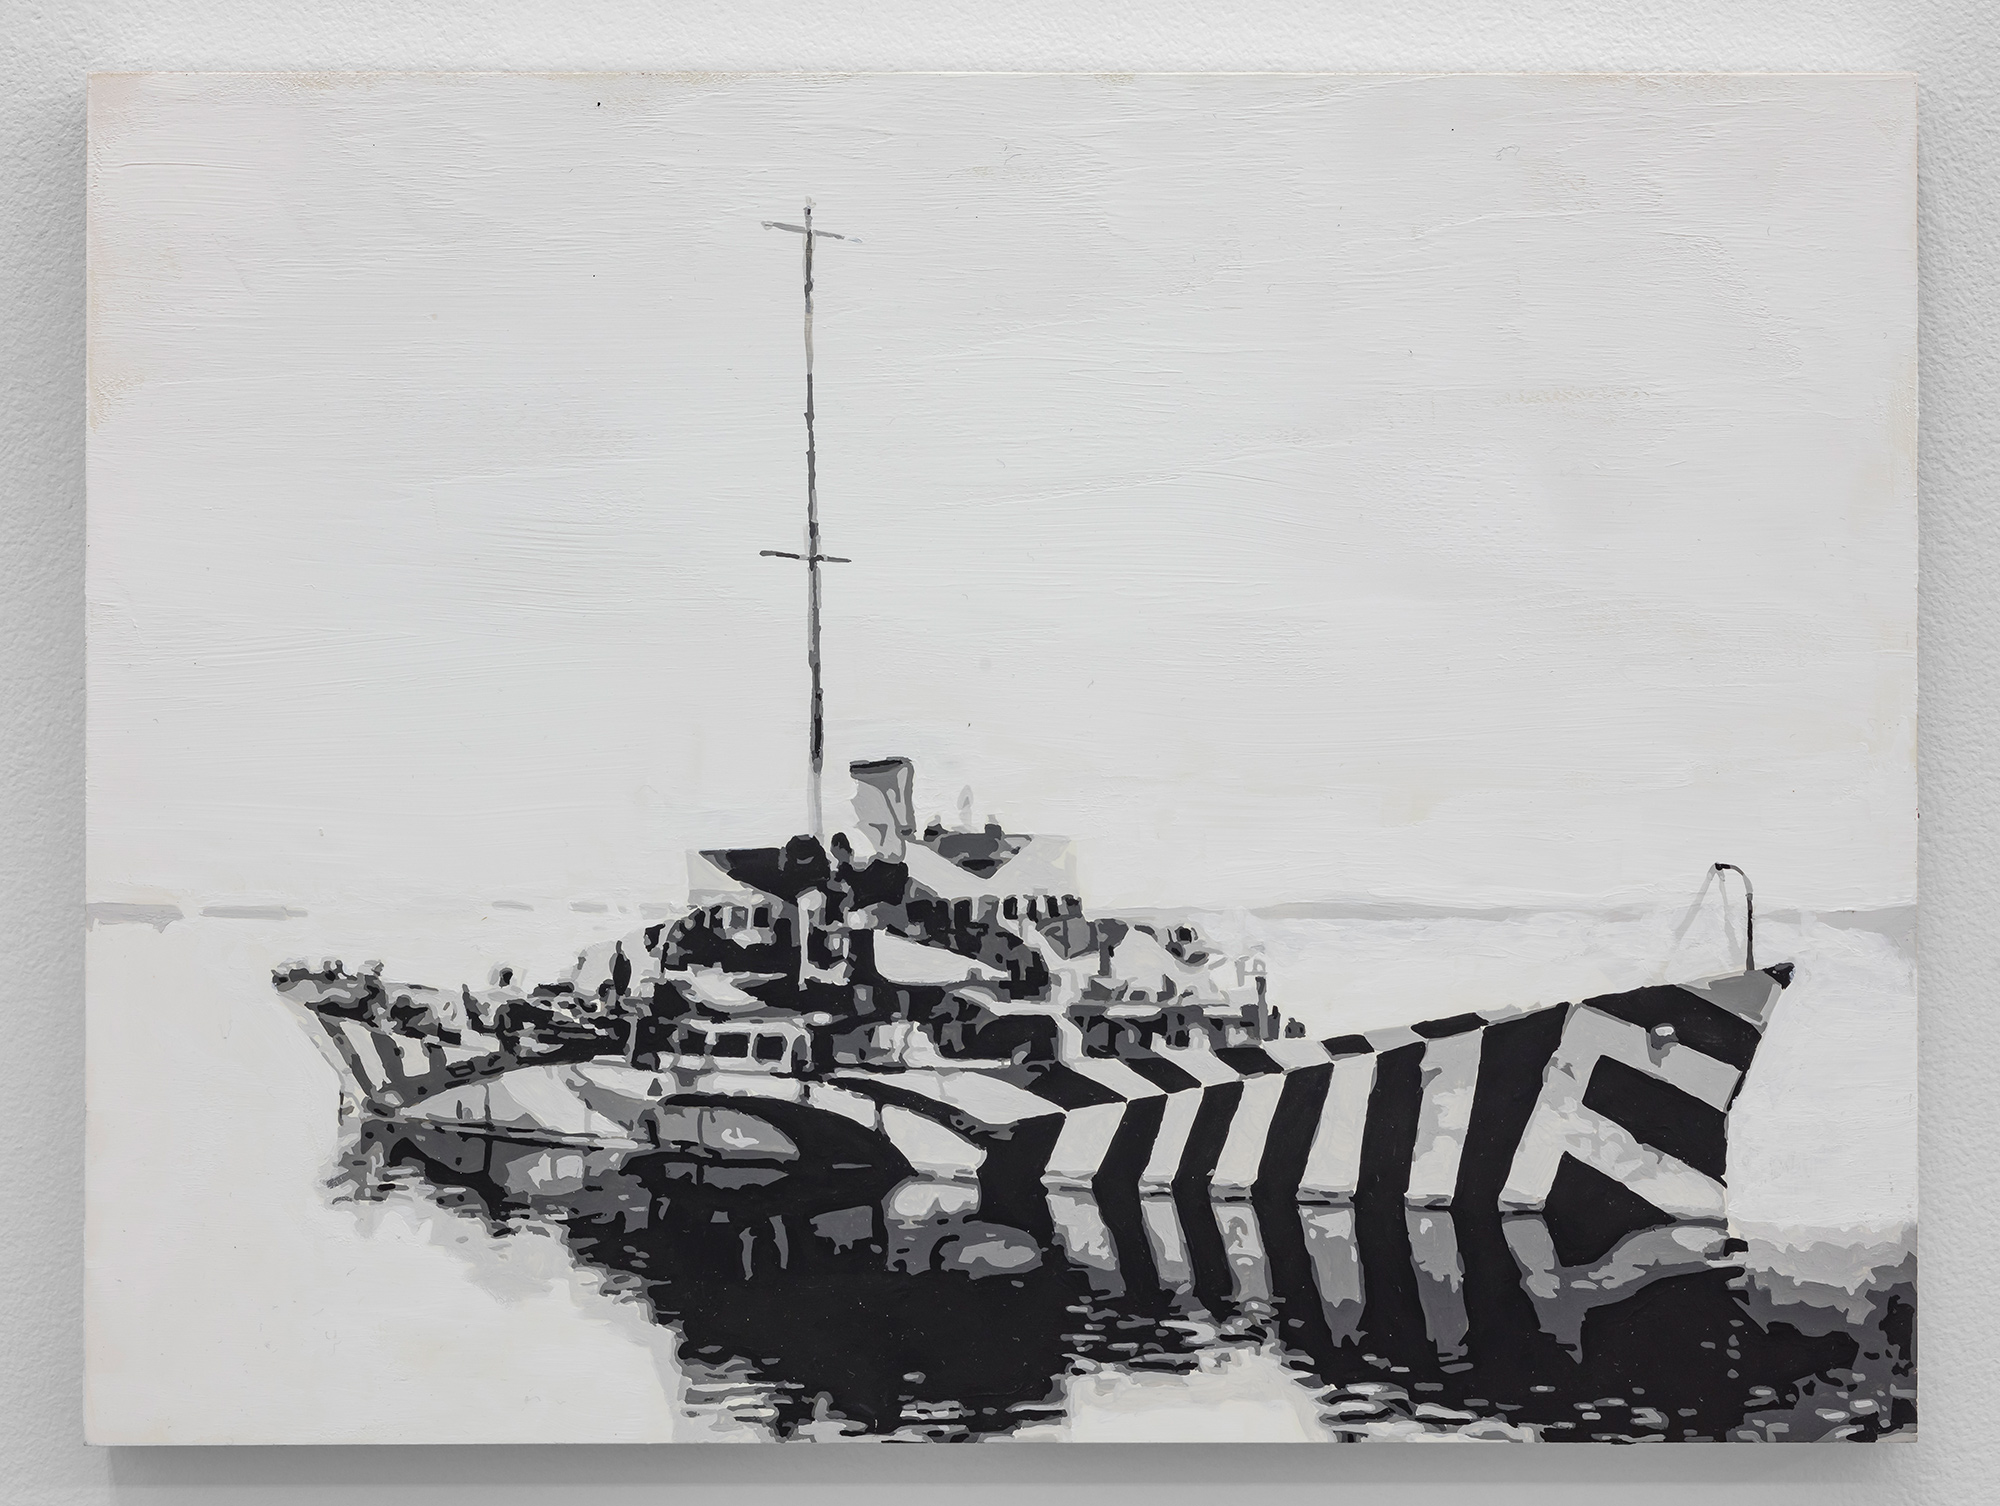  Dorian FitzGerald,  HMS Kilbride, Milford Haven, 13 January, 1919  , 2019 holbein acryla gouache on board, 9 x 12 inches  